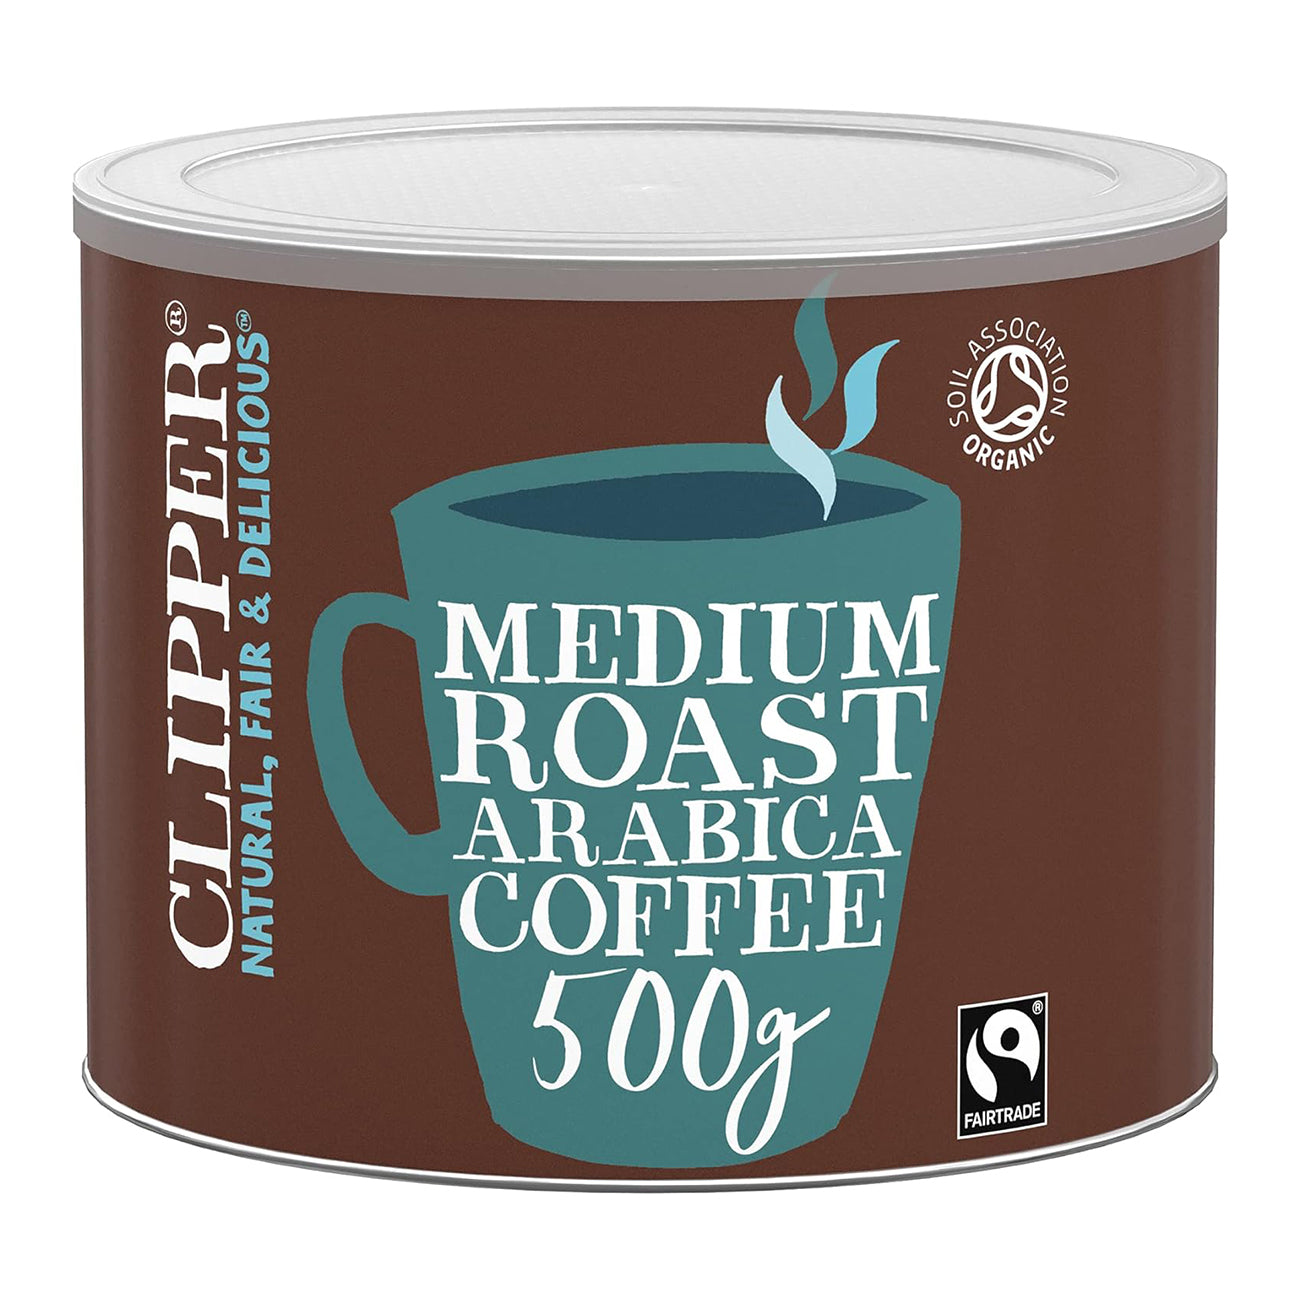 Medium Roast Arabica Coffee 500g